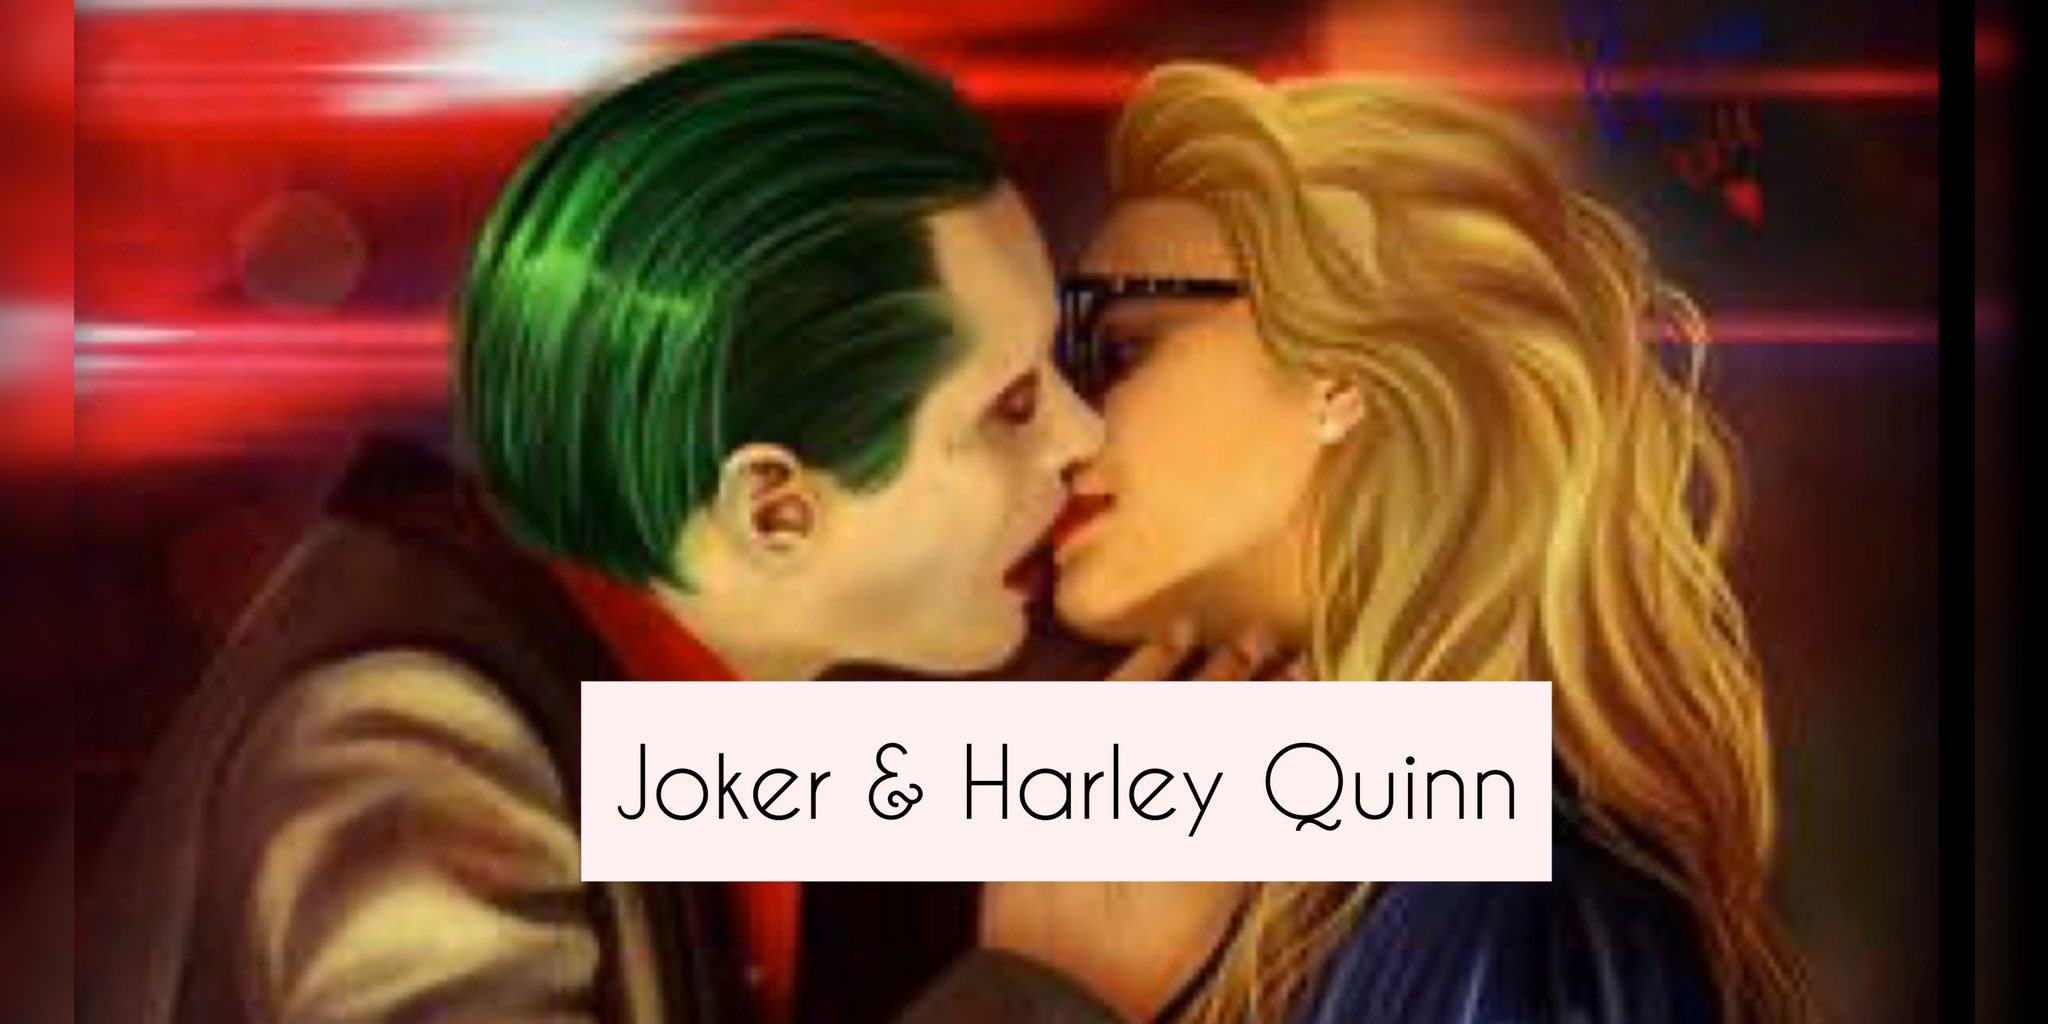 Crítico sección Sierra AlekayX on Twitter: "Historias de amor: Joker y Harley Quinn. Veamos:⬇️  https://t.co/WBS8Dhfnwc" / Twitter